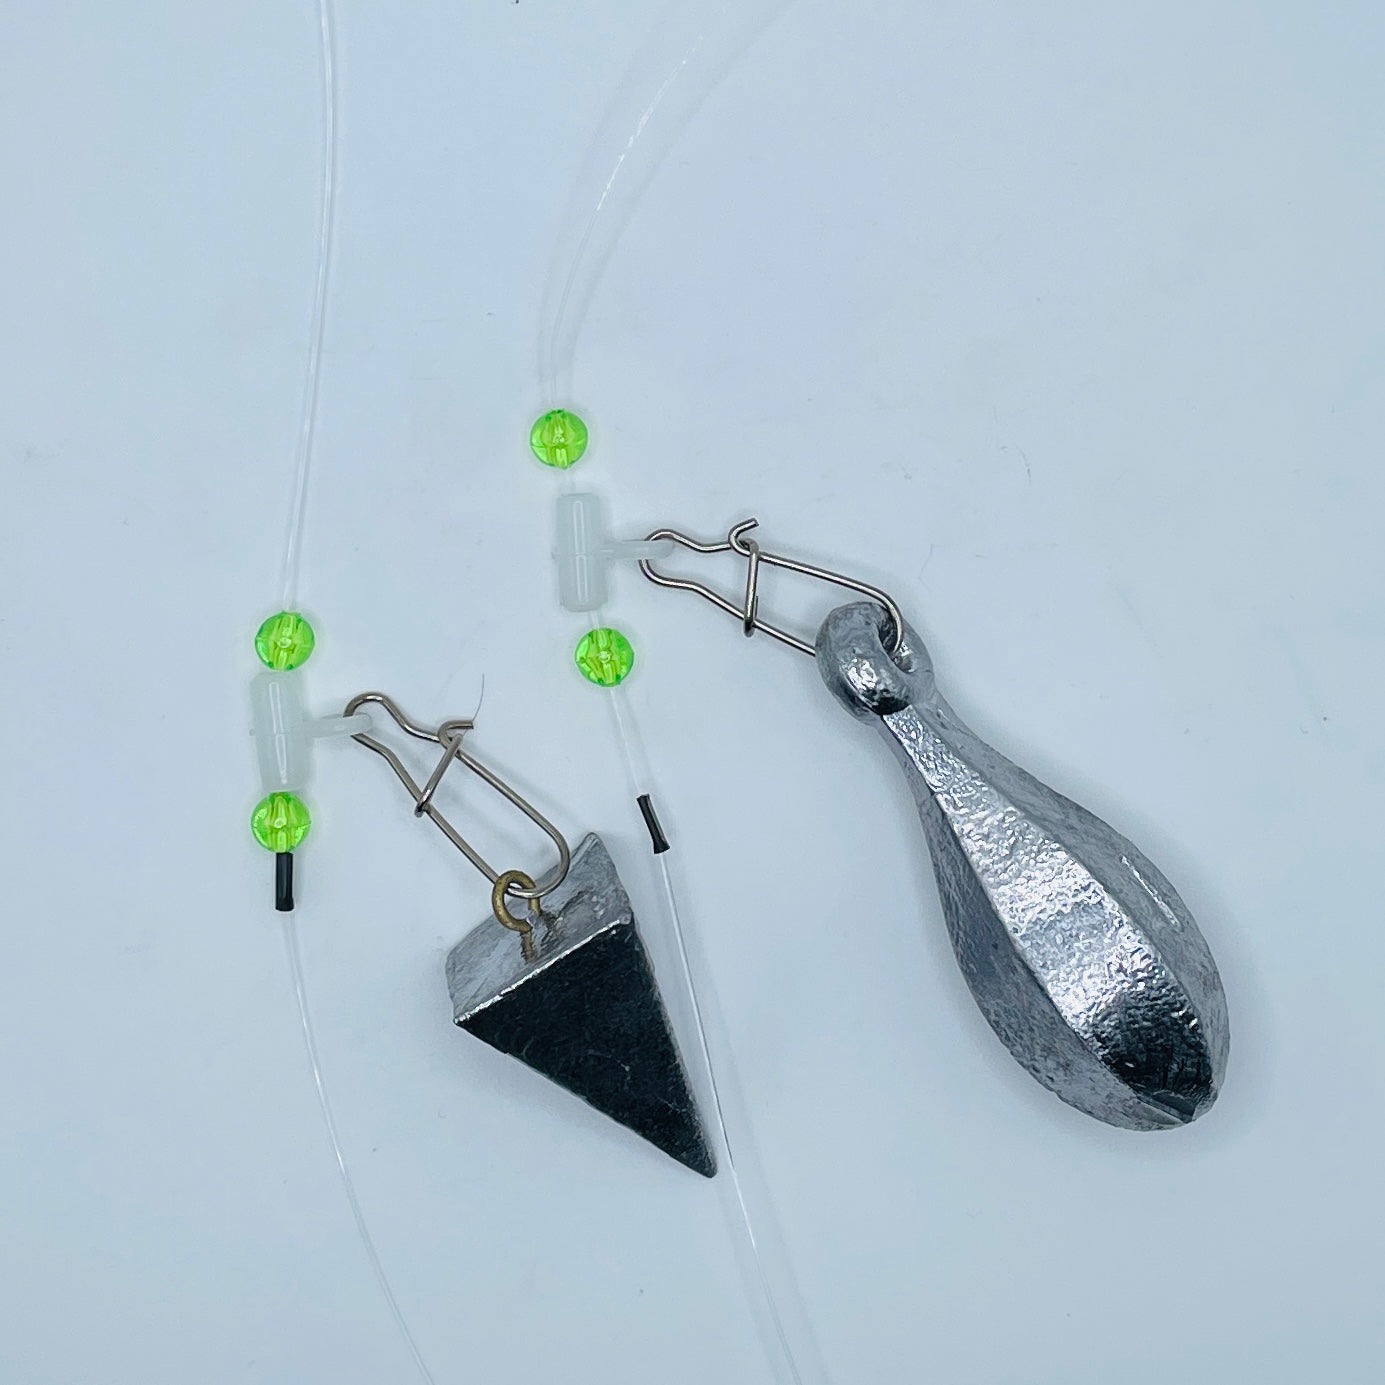 24" nylon slide Bait Rigs 2pk 30#-80# Monofilament Fish Finder rigs